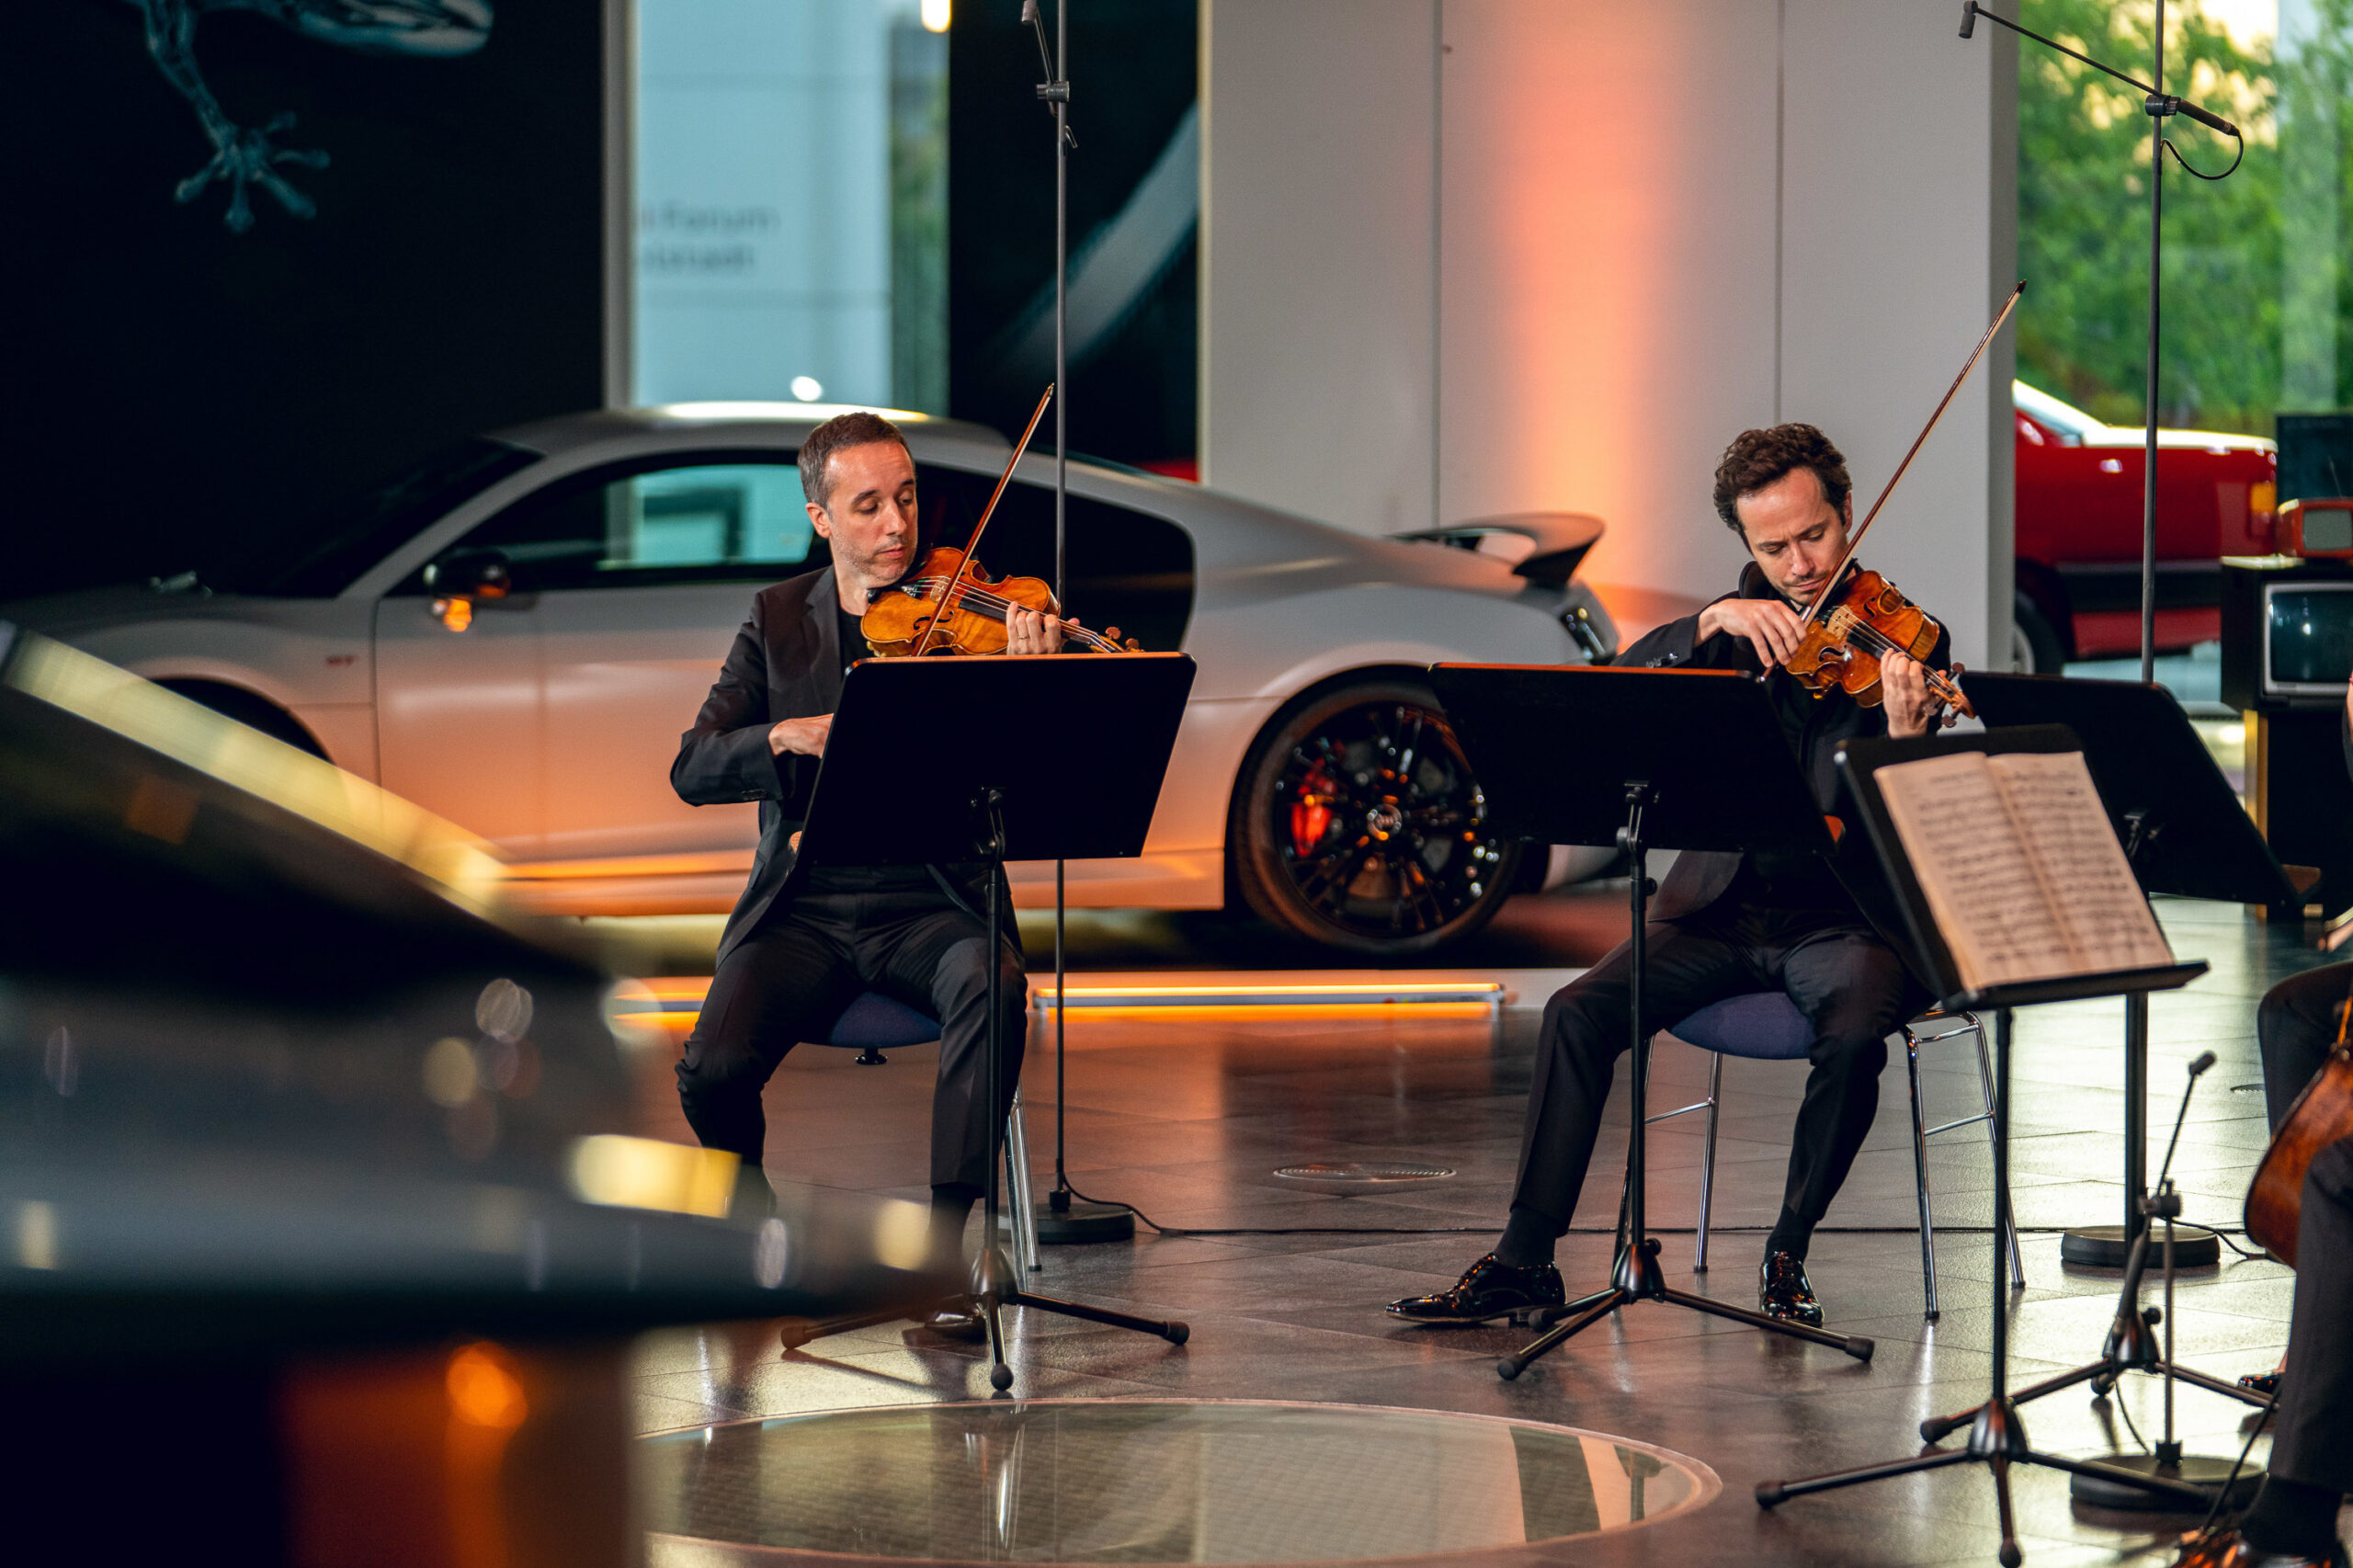 Audi Sommerkonzerte 2020